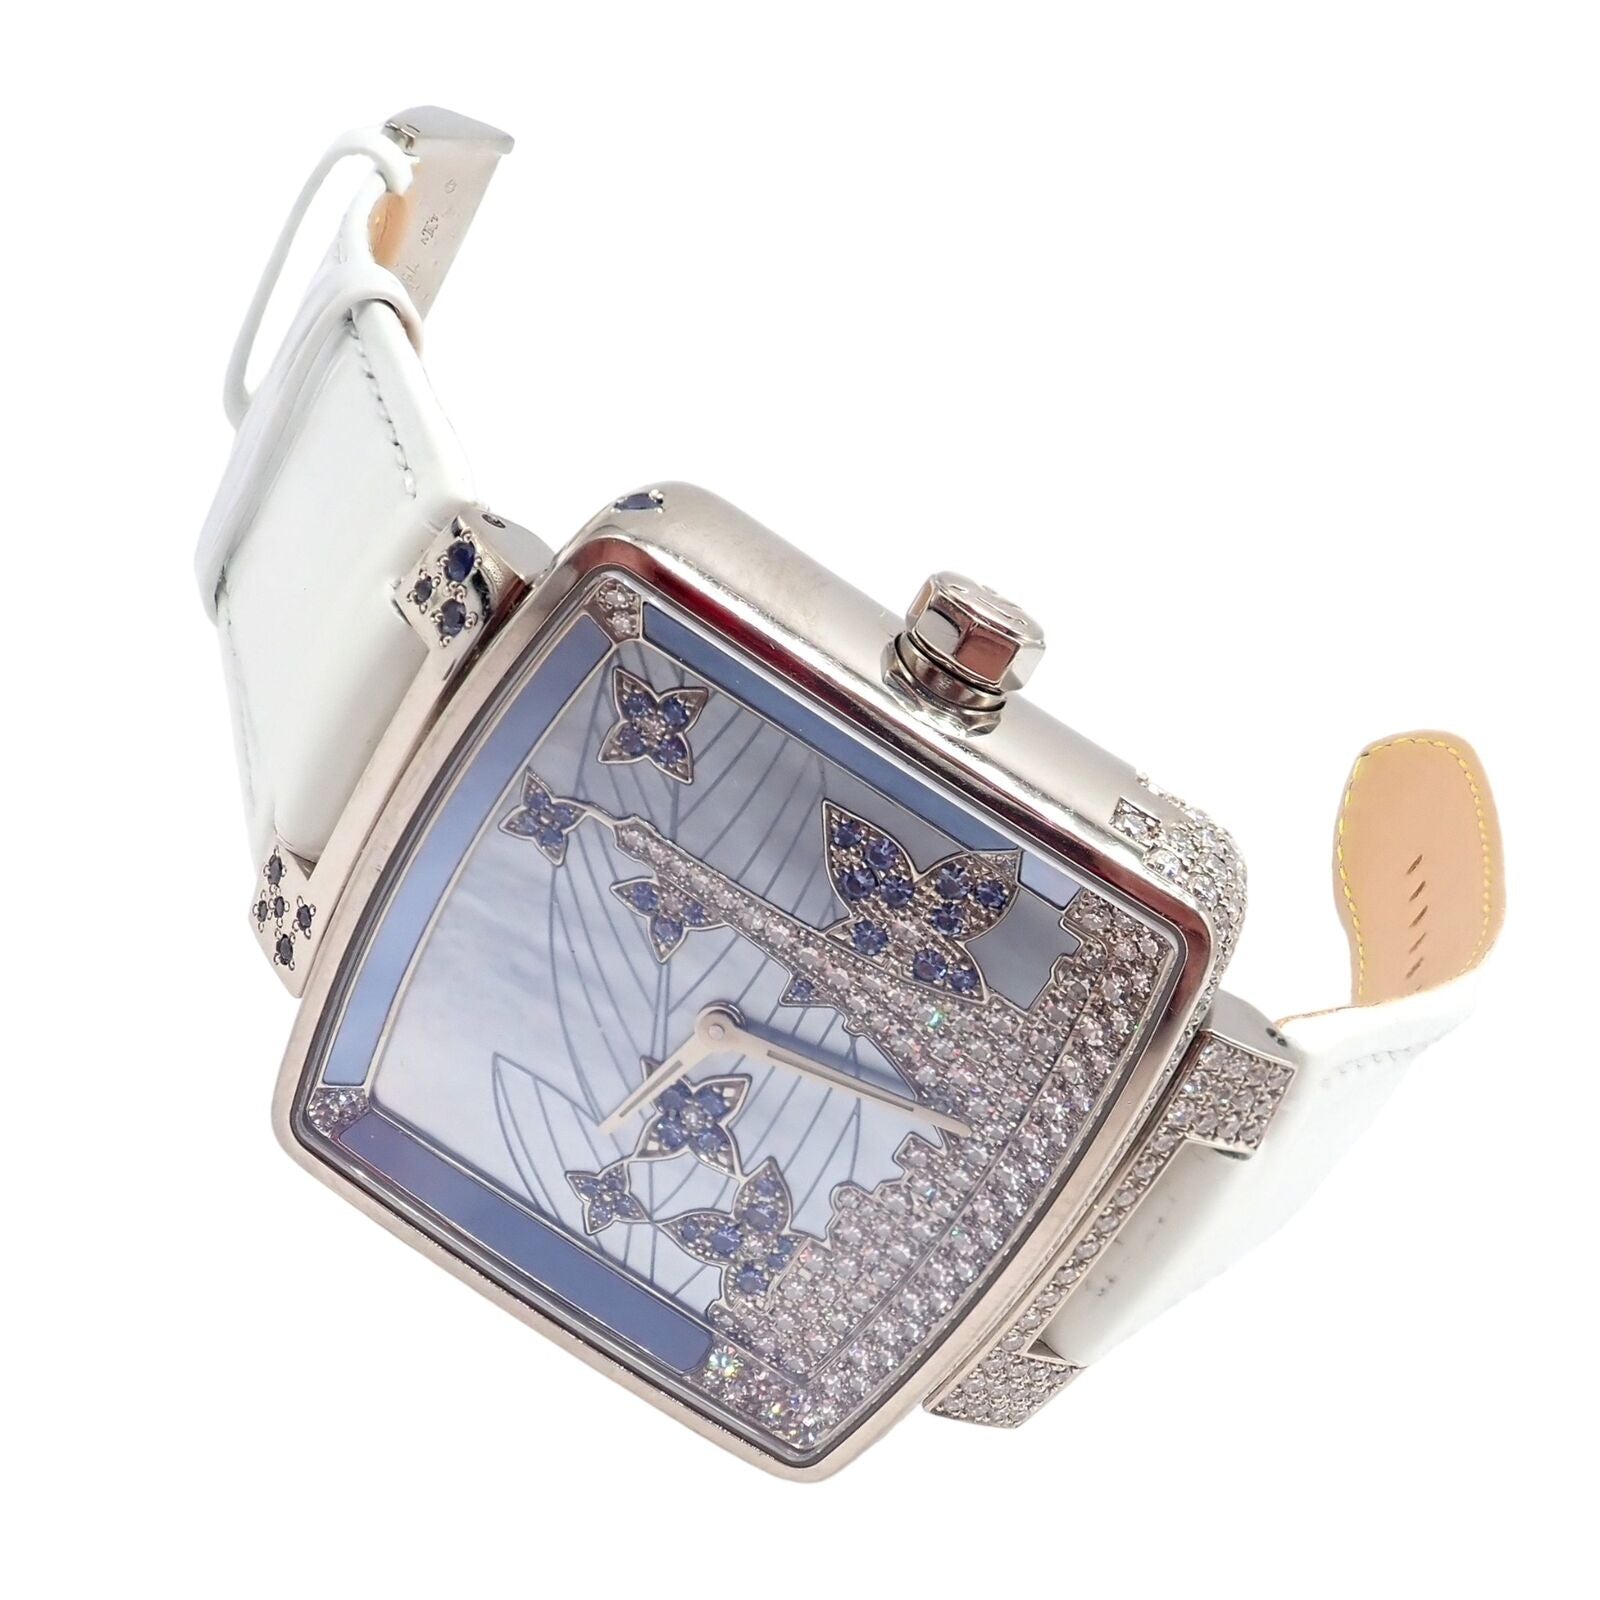 Shop Louis Vuitton Women's Watches